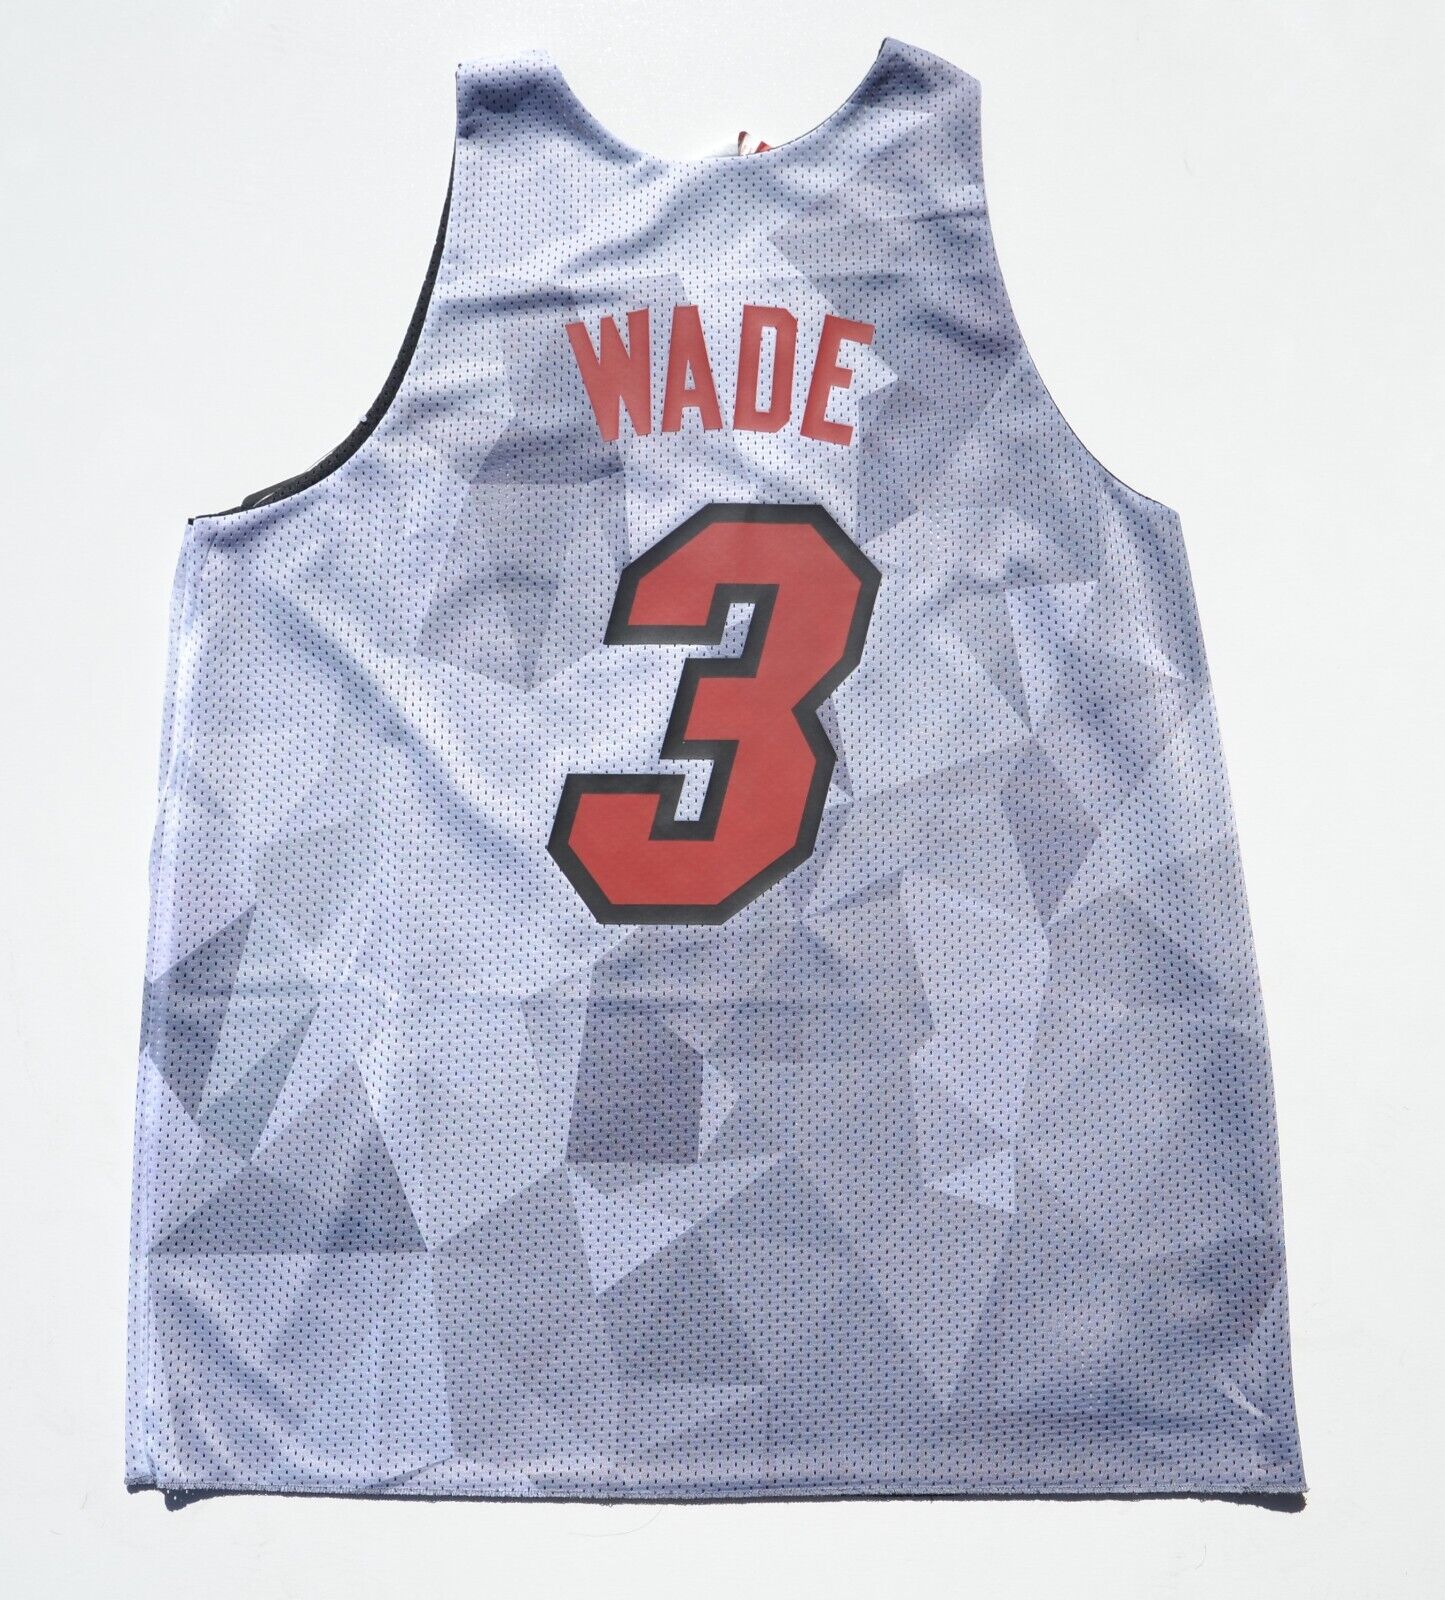 Miami Heat Reversible Dwayne Wade (XL)